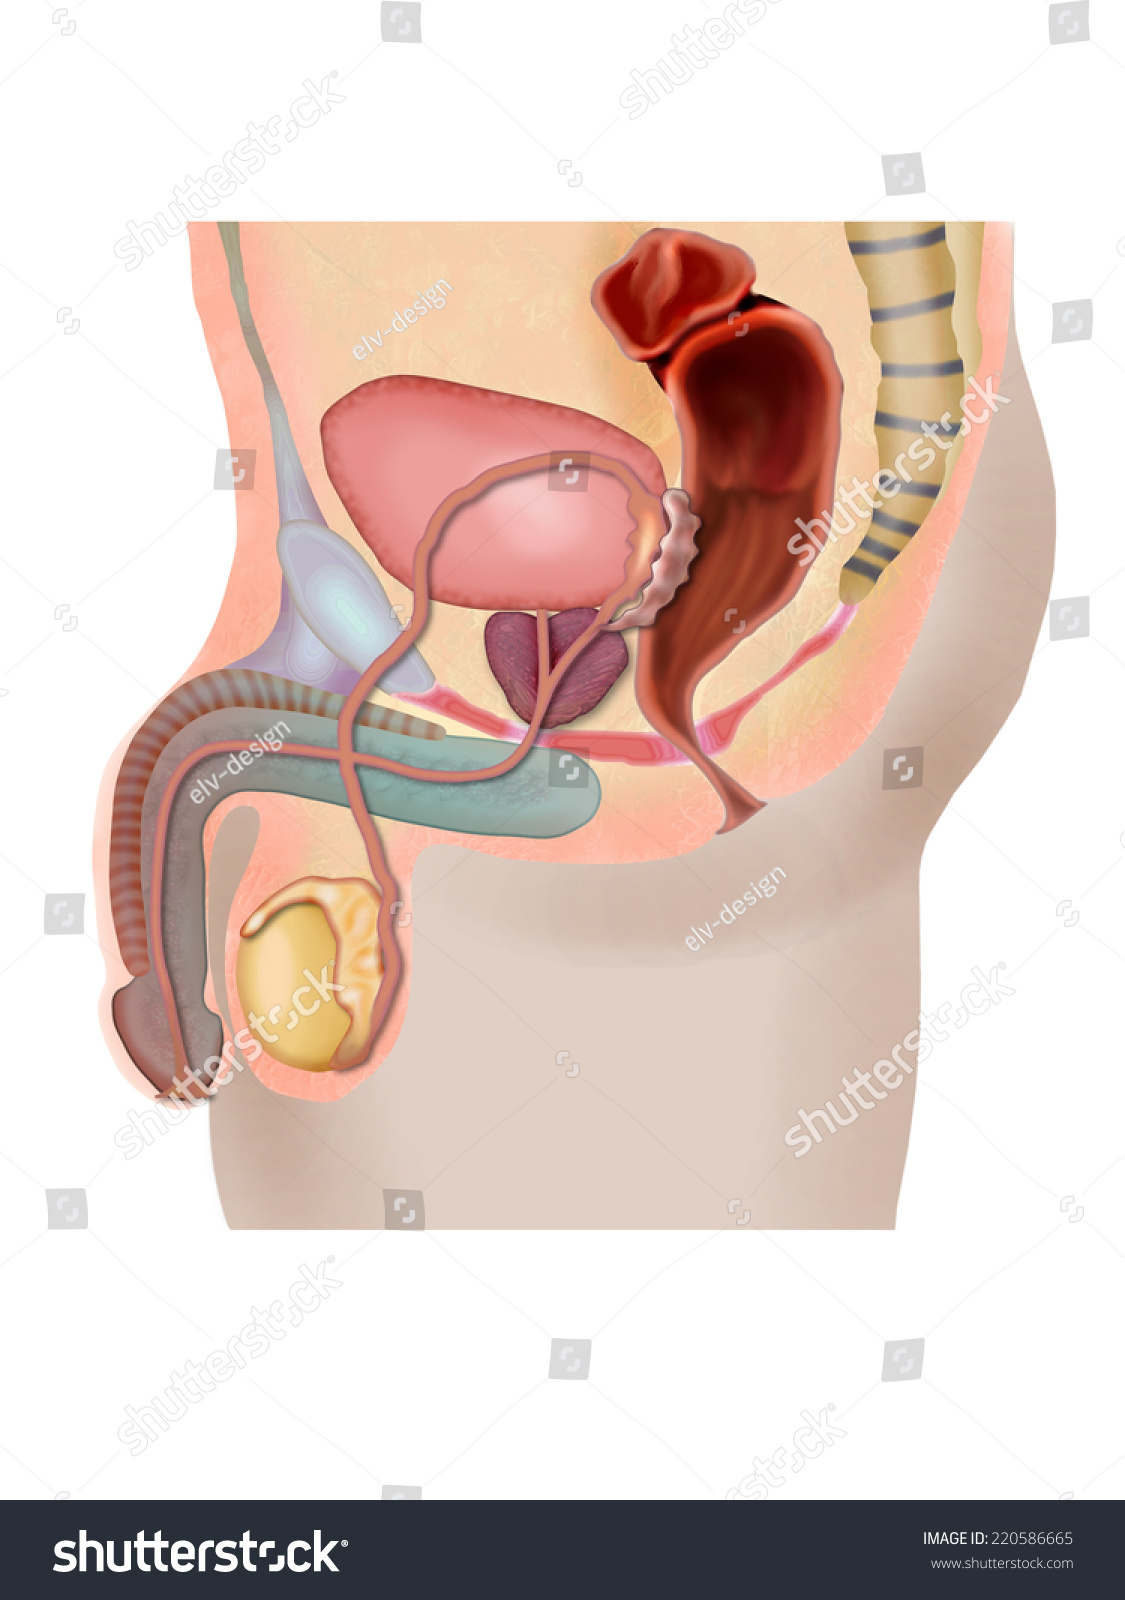 Anatomy Of Sex Organs 56